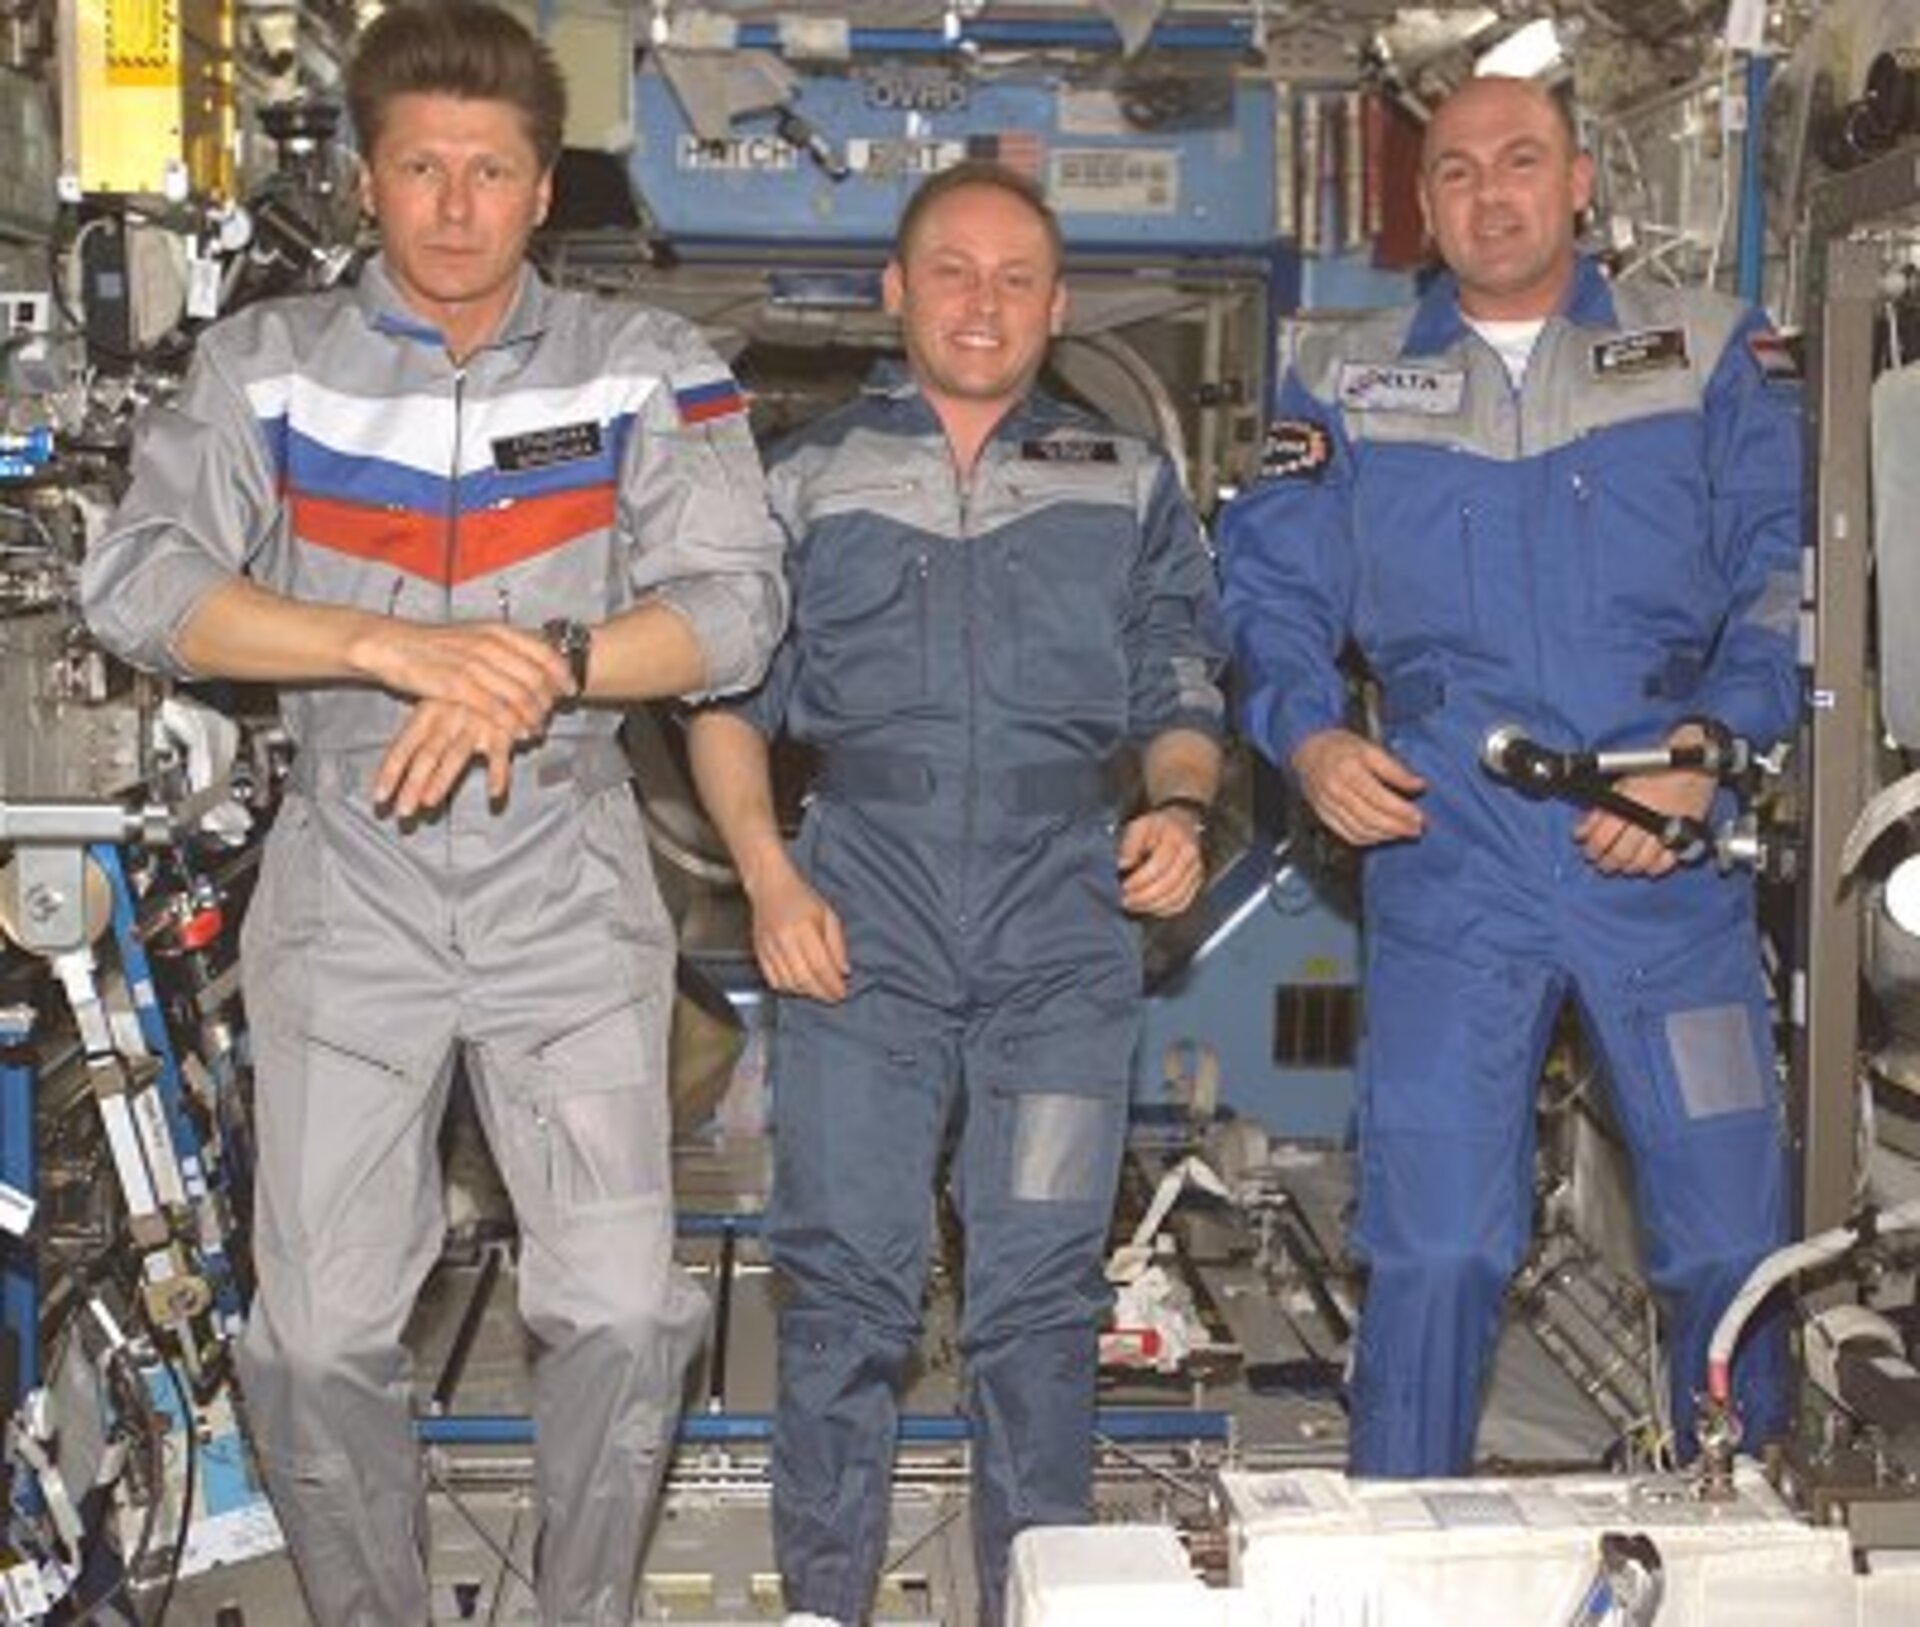 The Soyuz TMA-3 crew on board ISS